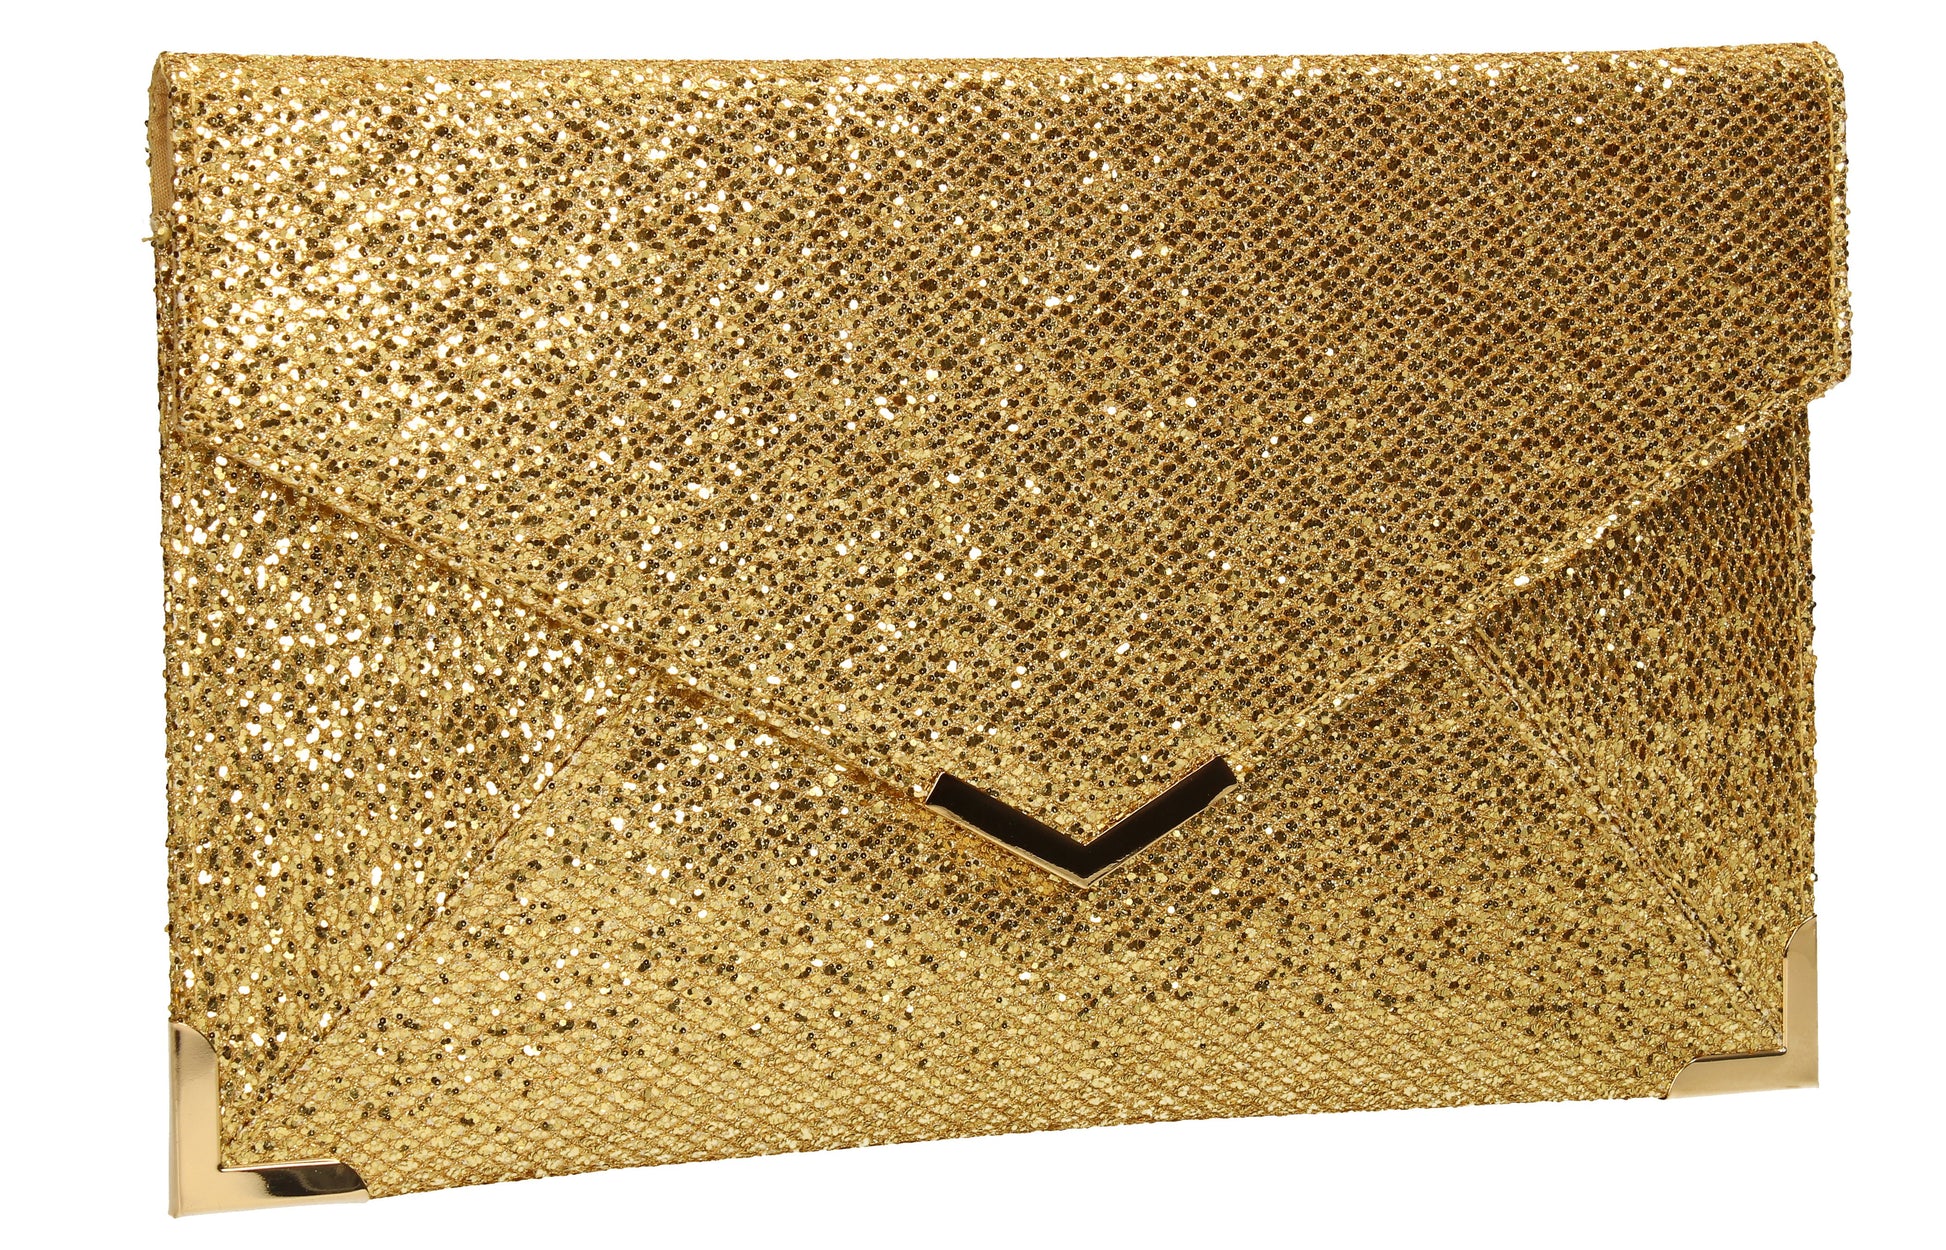 SWANKYSWANS Korie Clutch Bag Gold Cute Cheap Clutch Bag For Weddings School and Work